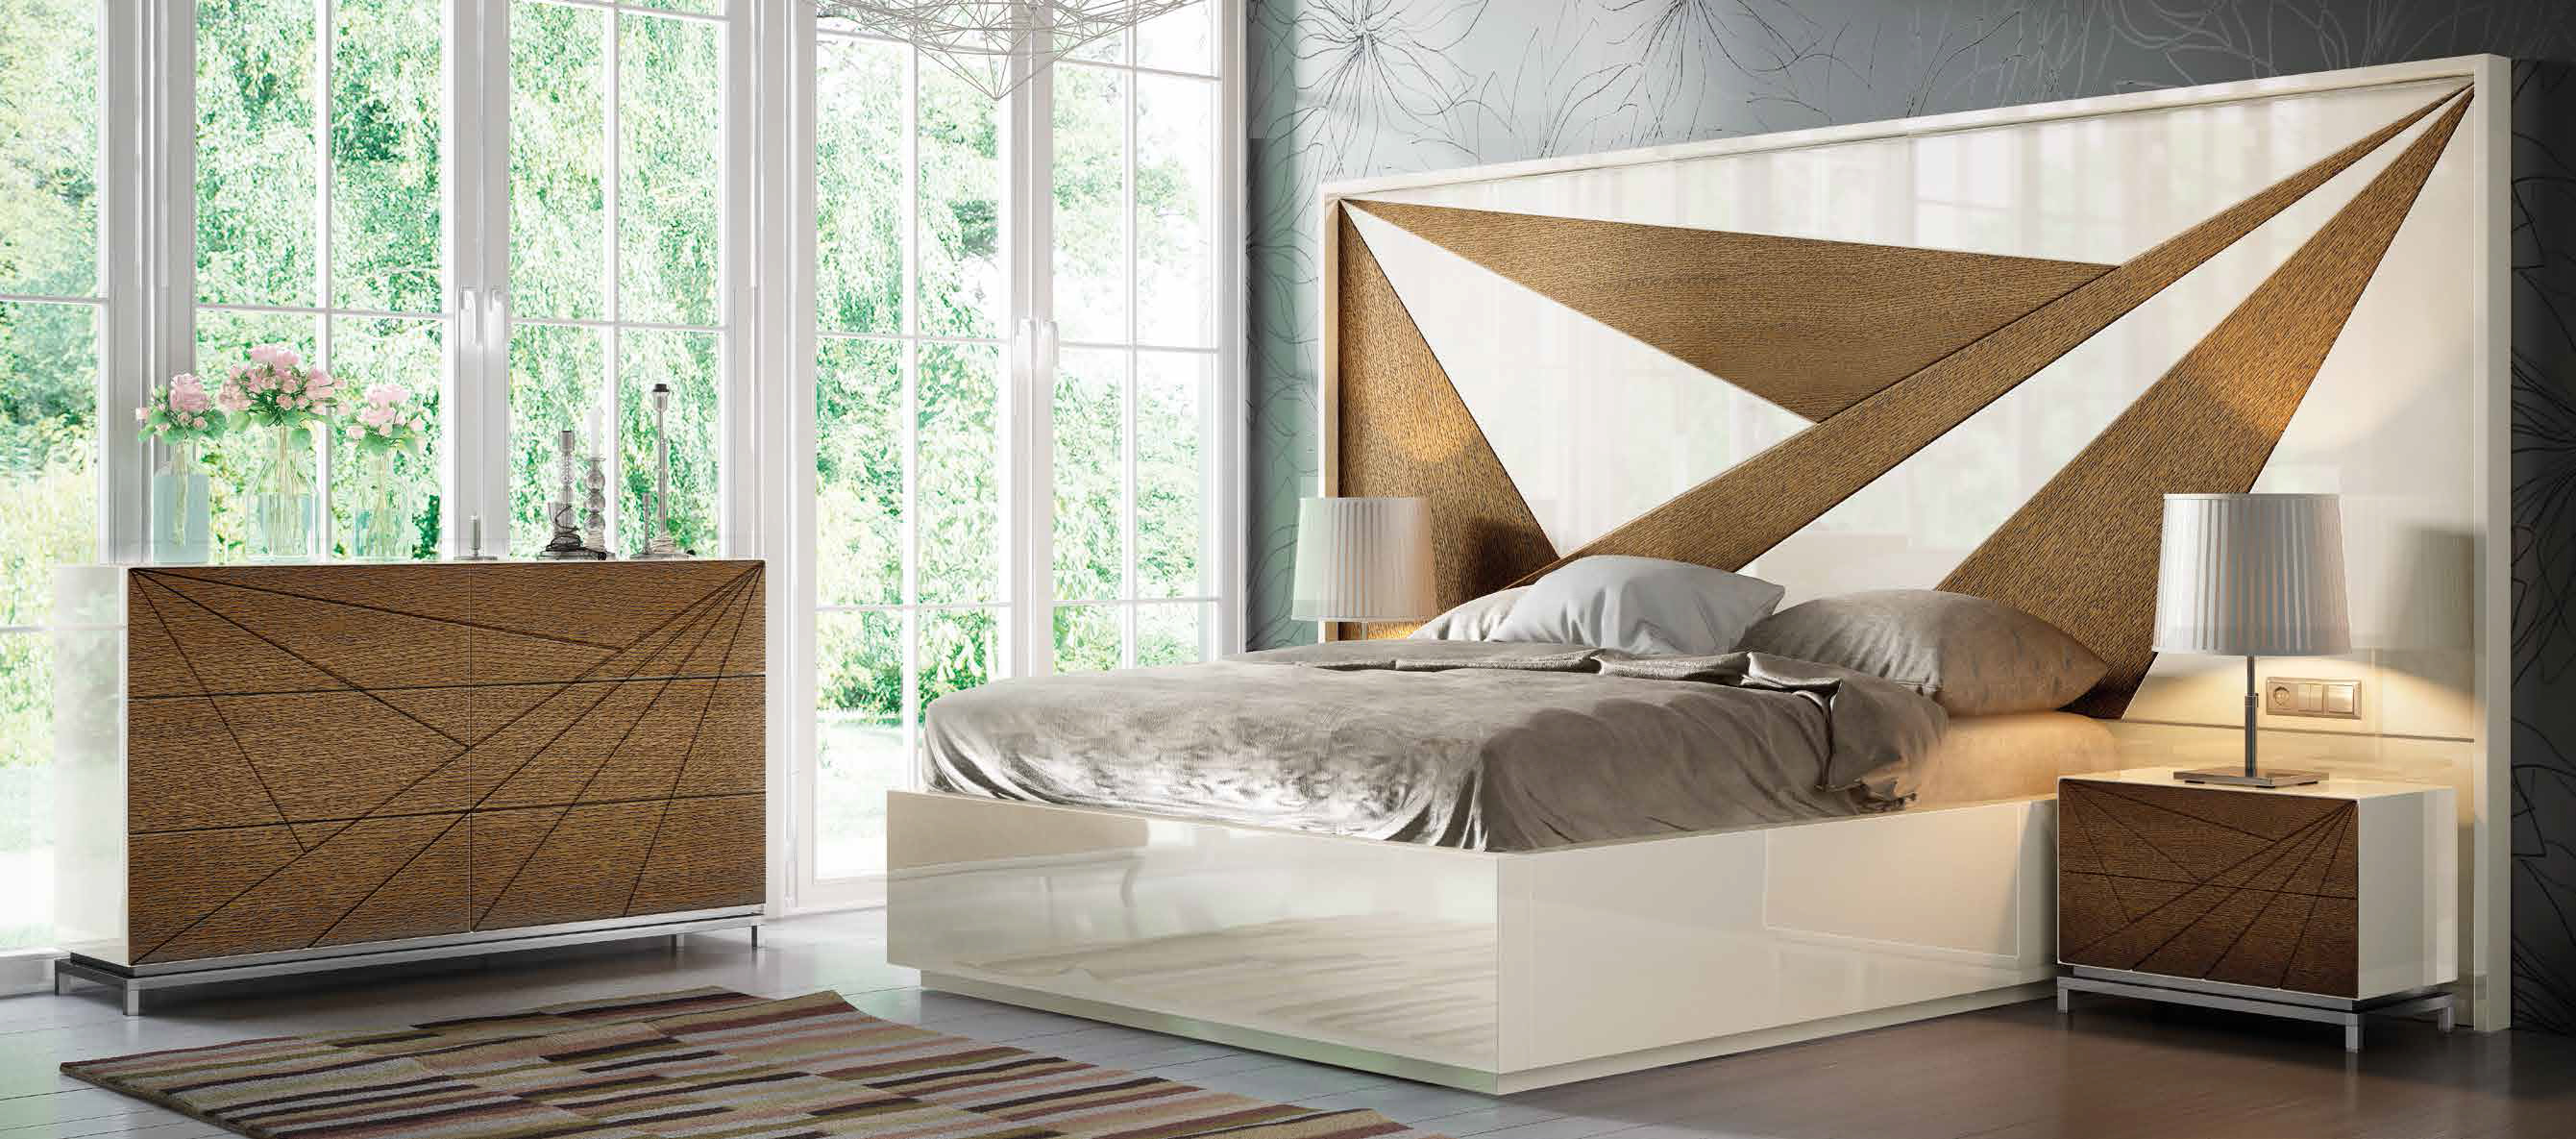 Brands Franco Furniture Bedrooms vol3, Spain DOR 19